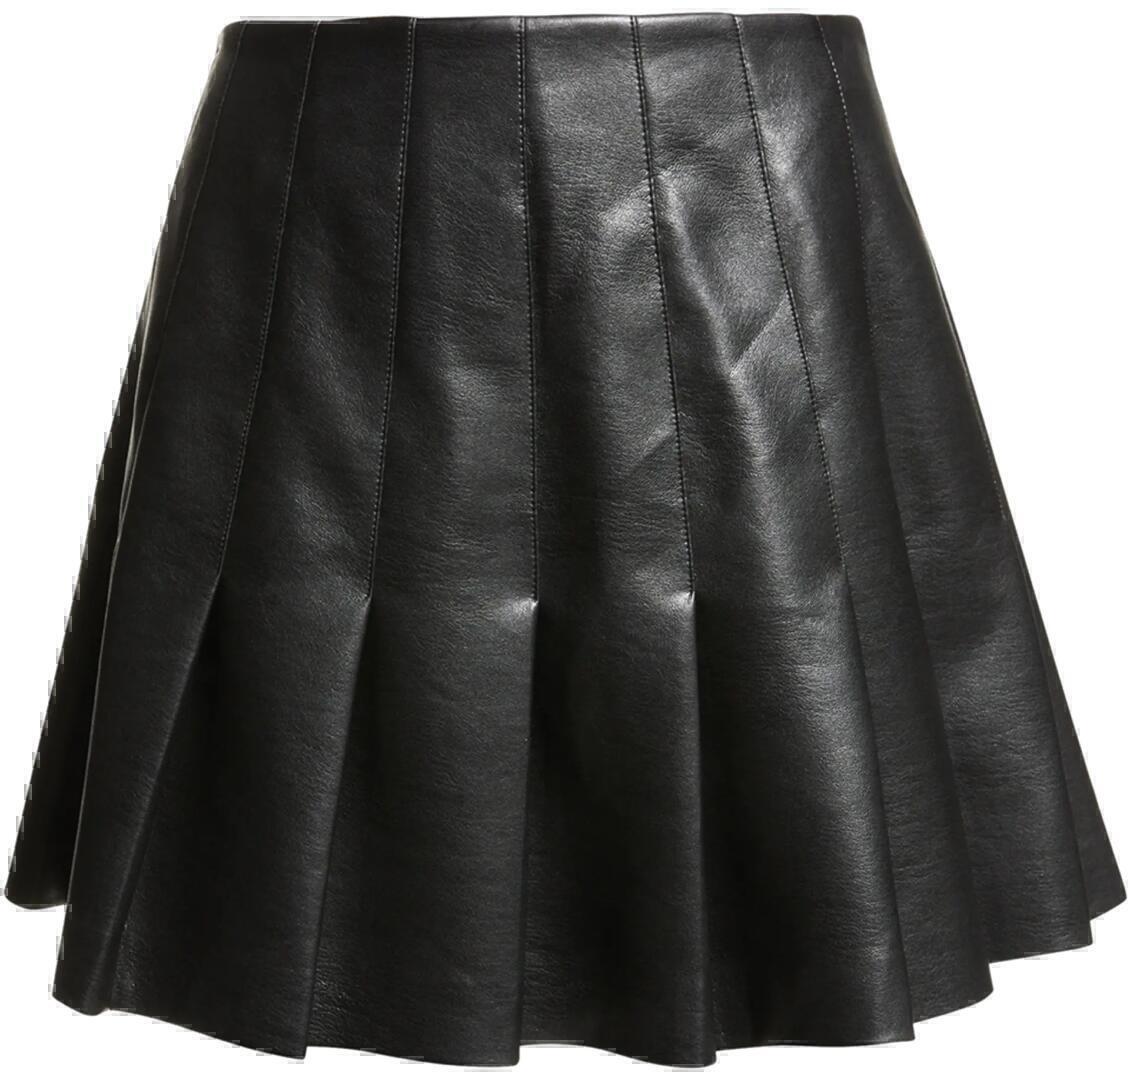 Carter Skirt (Black Vegan Leather) | style